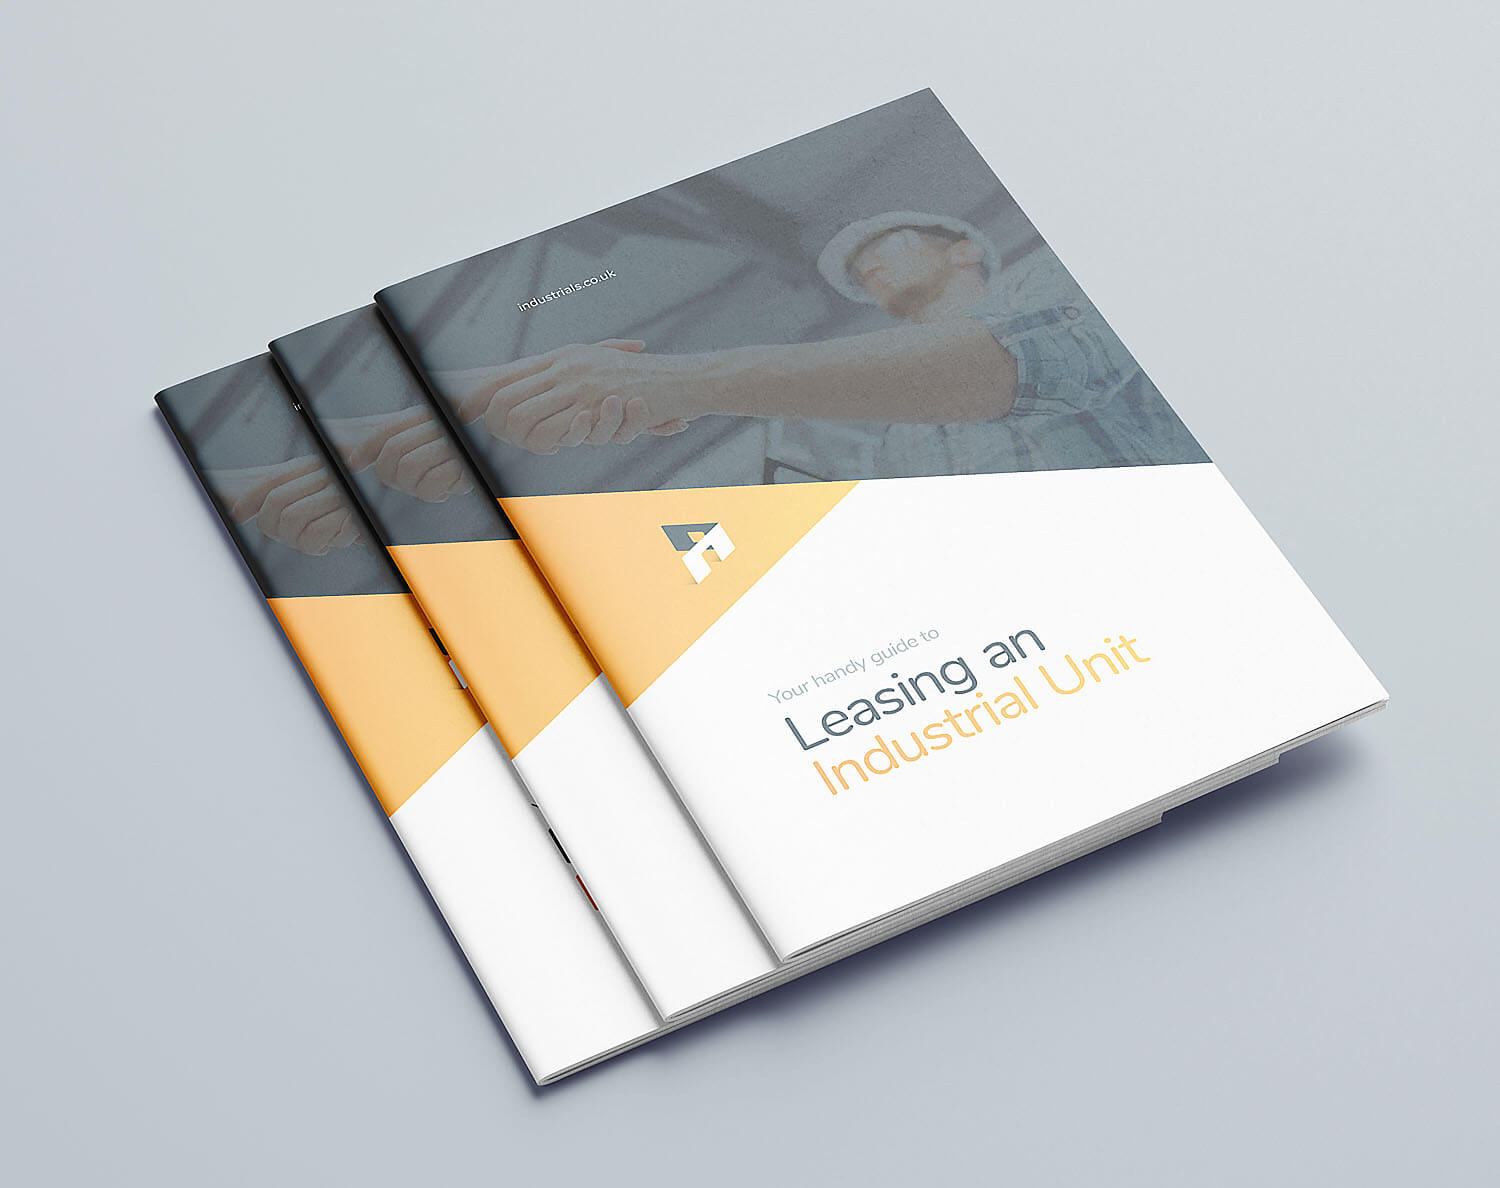 Lease guide brochure design for Multi-let Industrial REIT - Industrials.co.uk